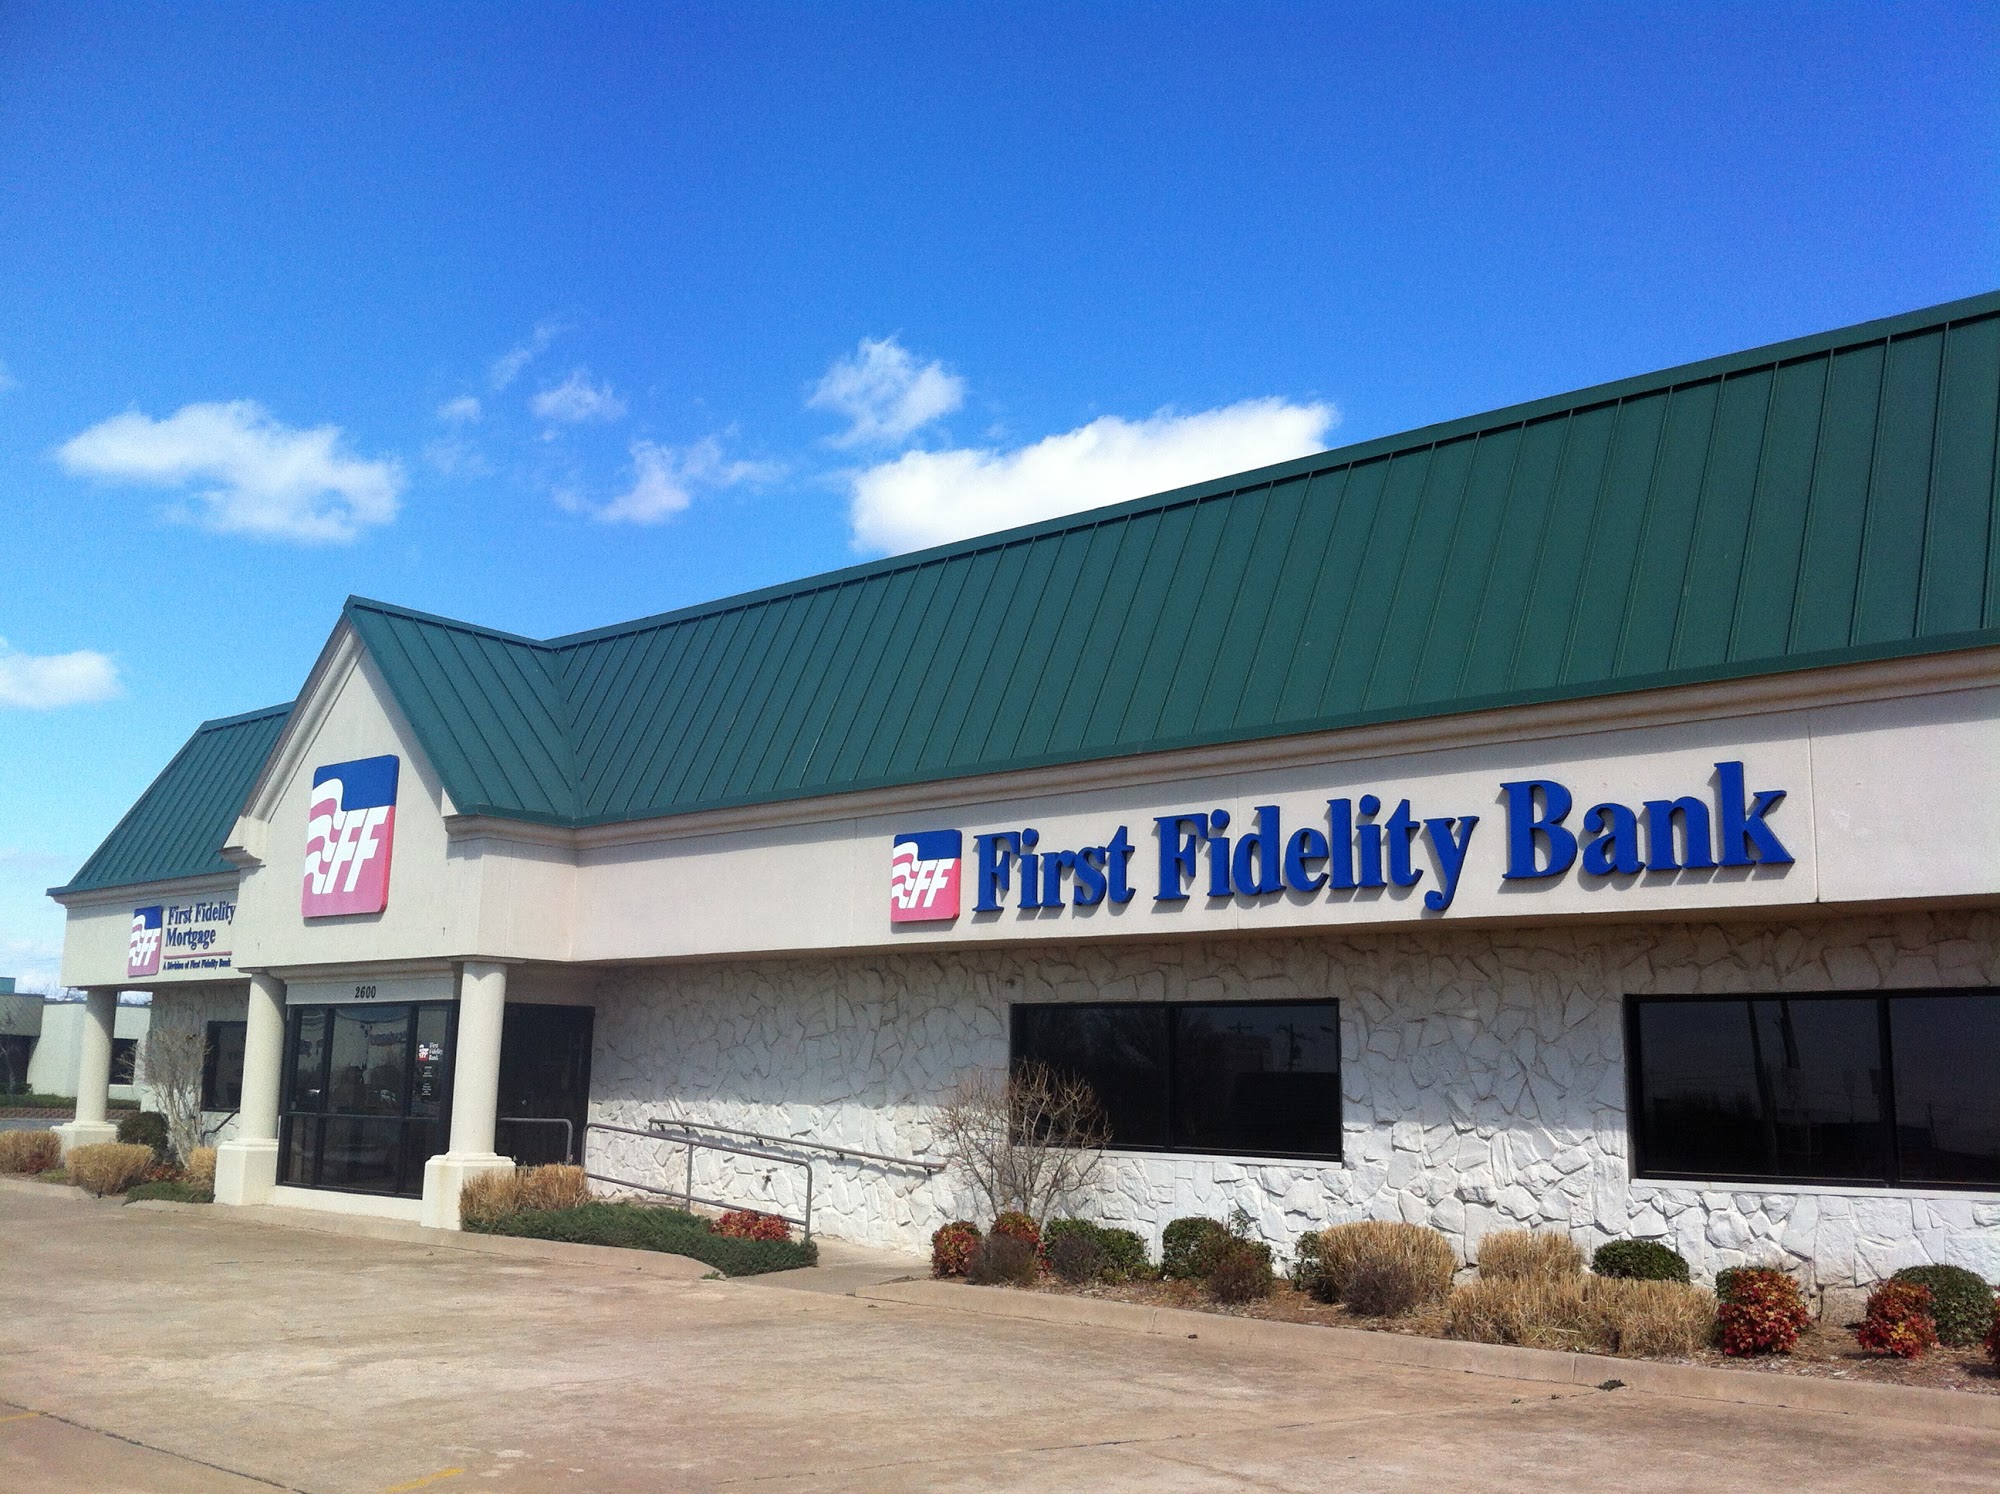 First Fidelity Bank - Edmond Broadway